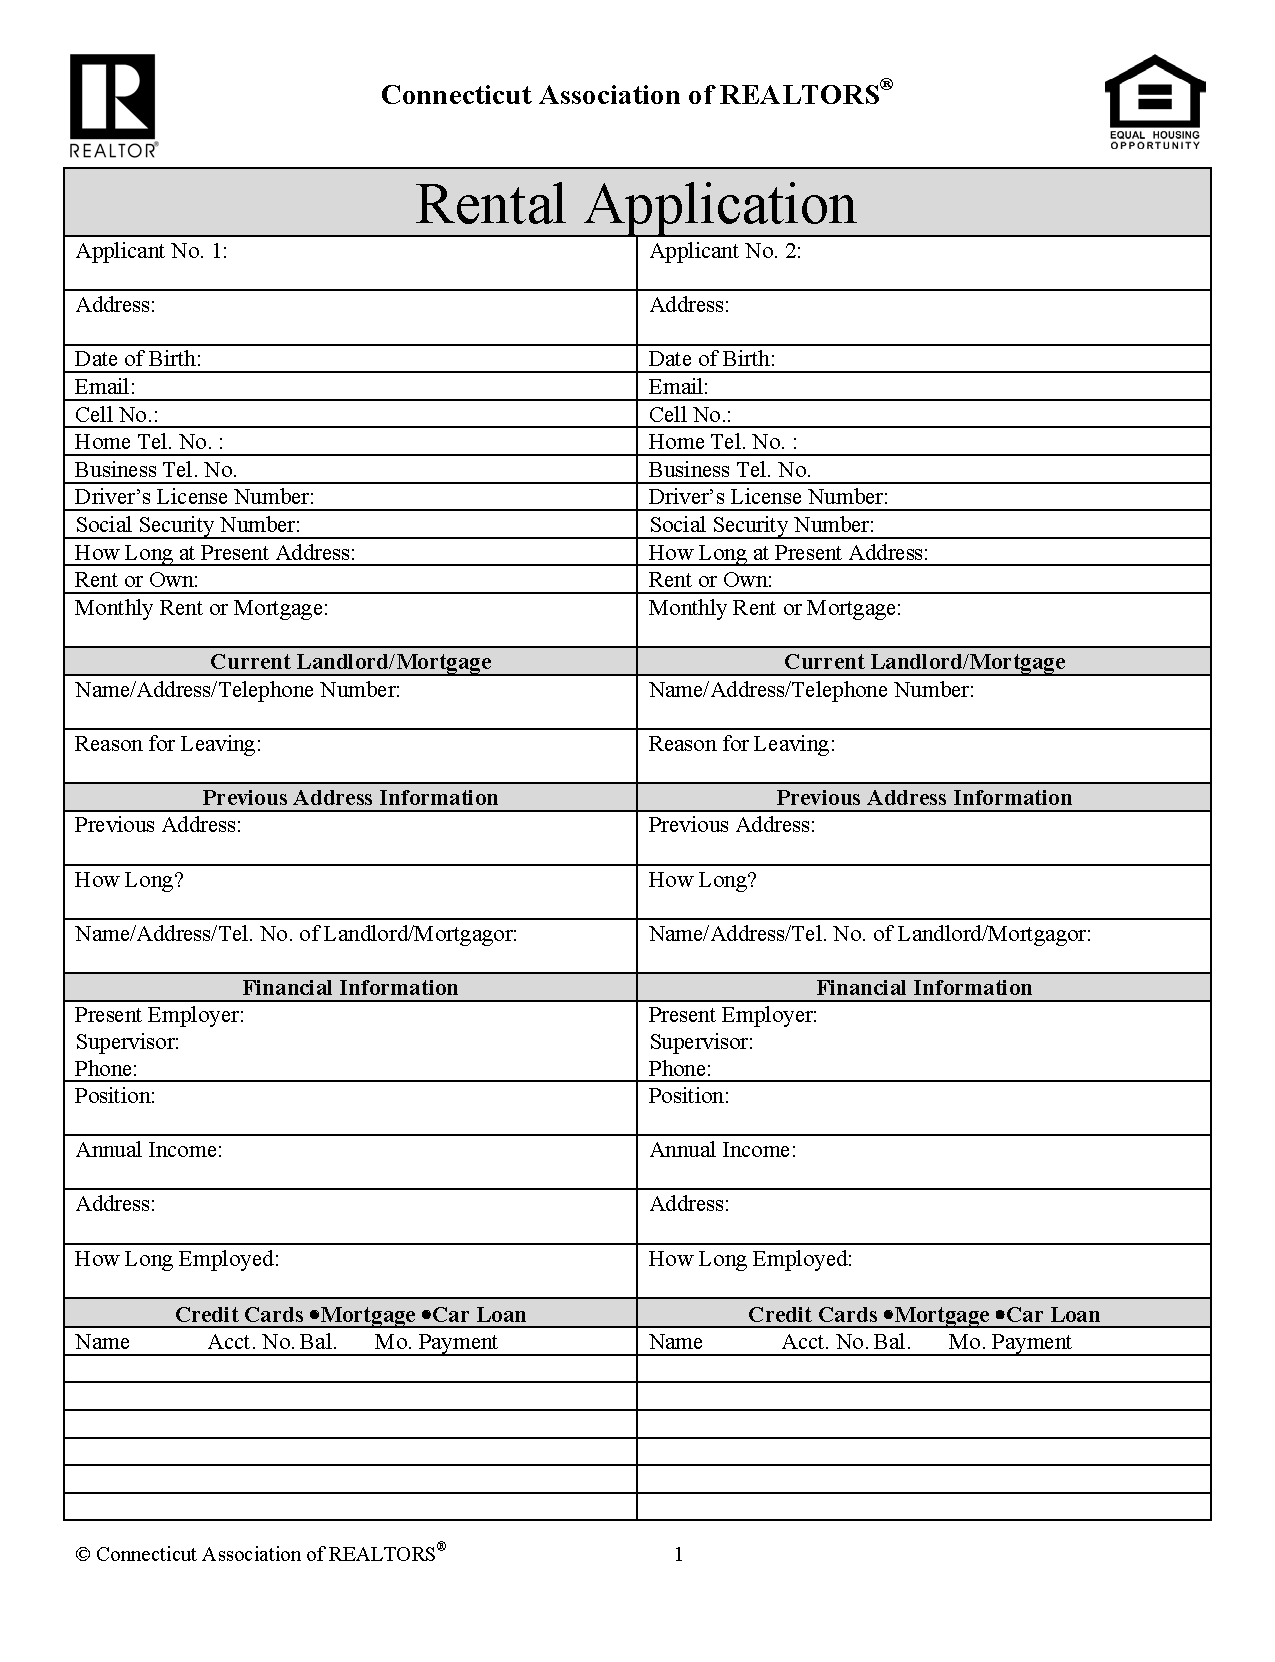 Rental Application Form Ct